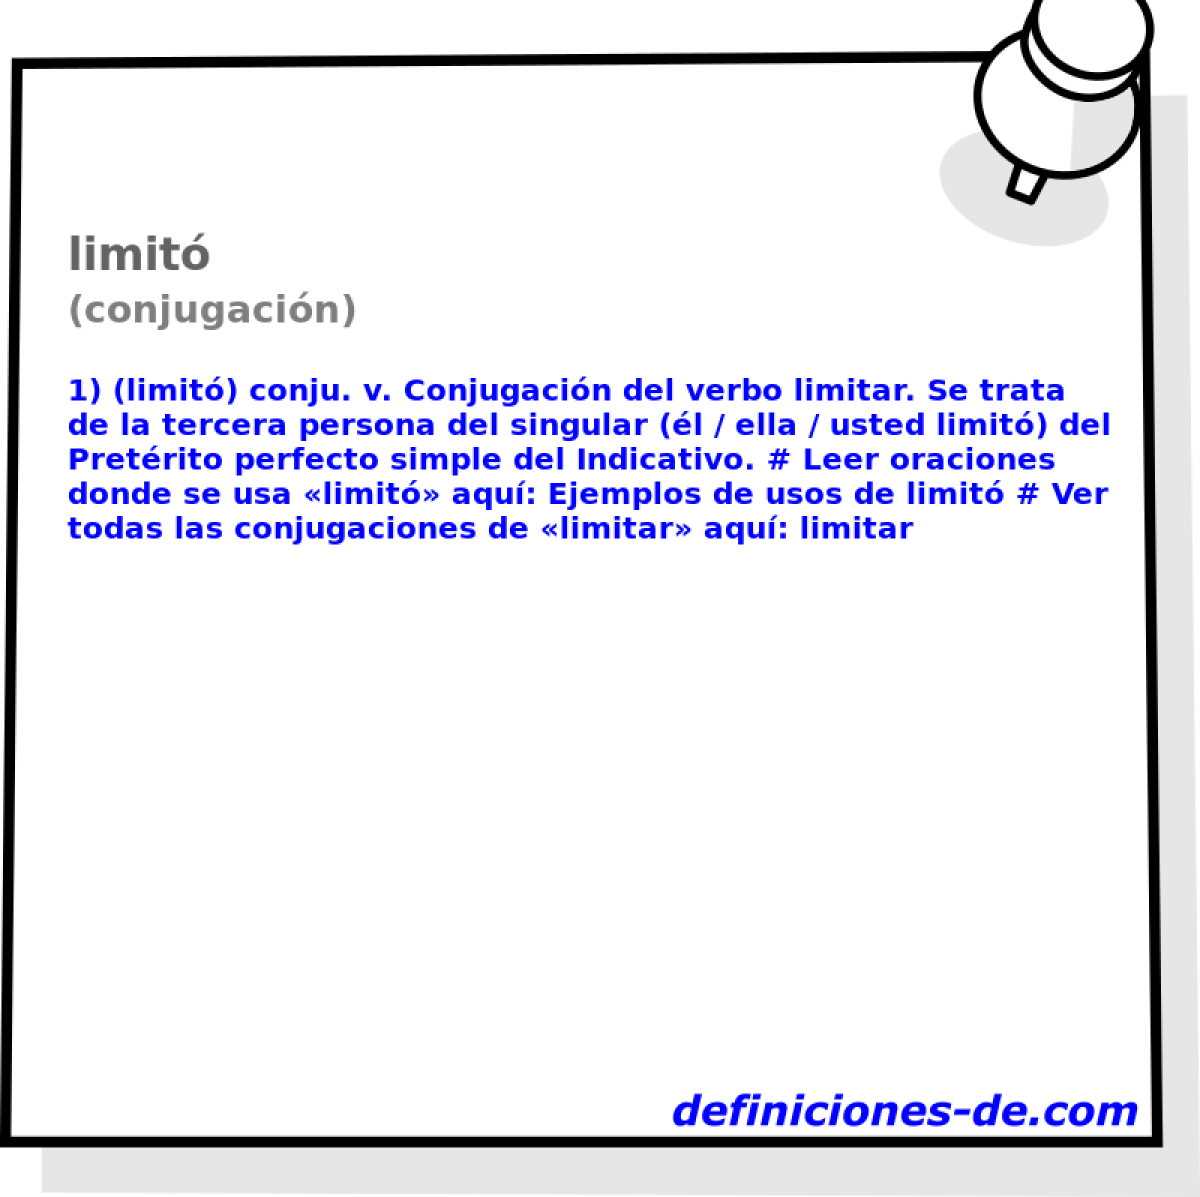 limit (conjugacin)